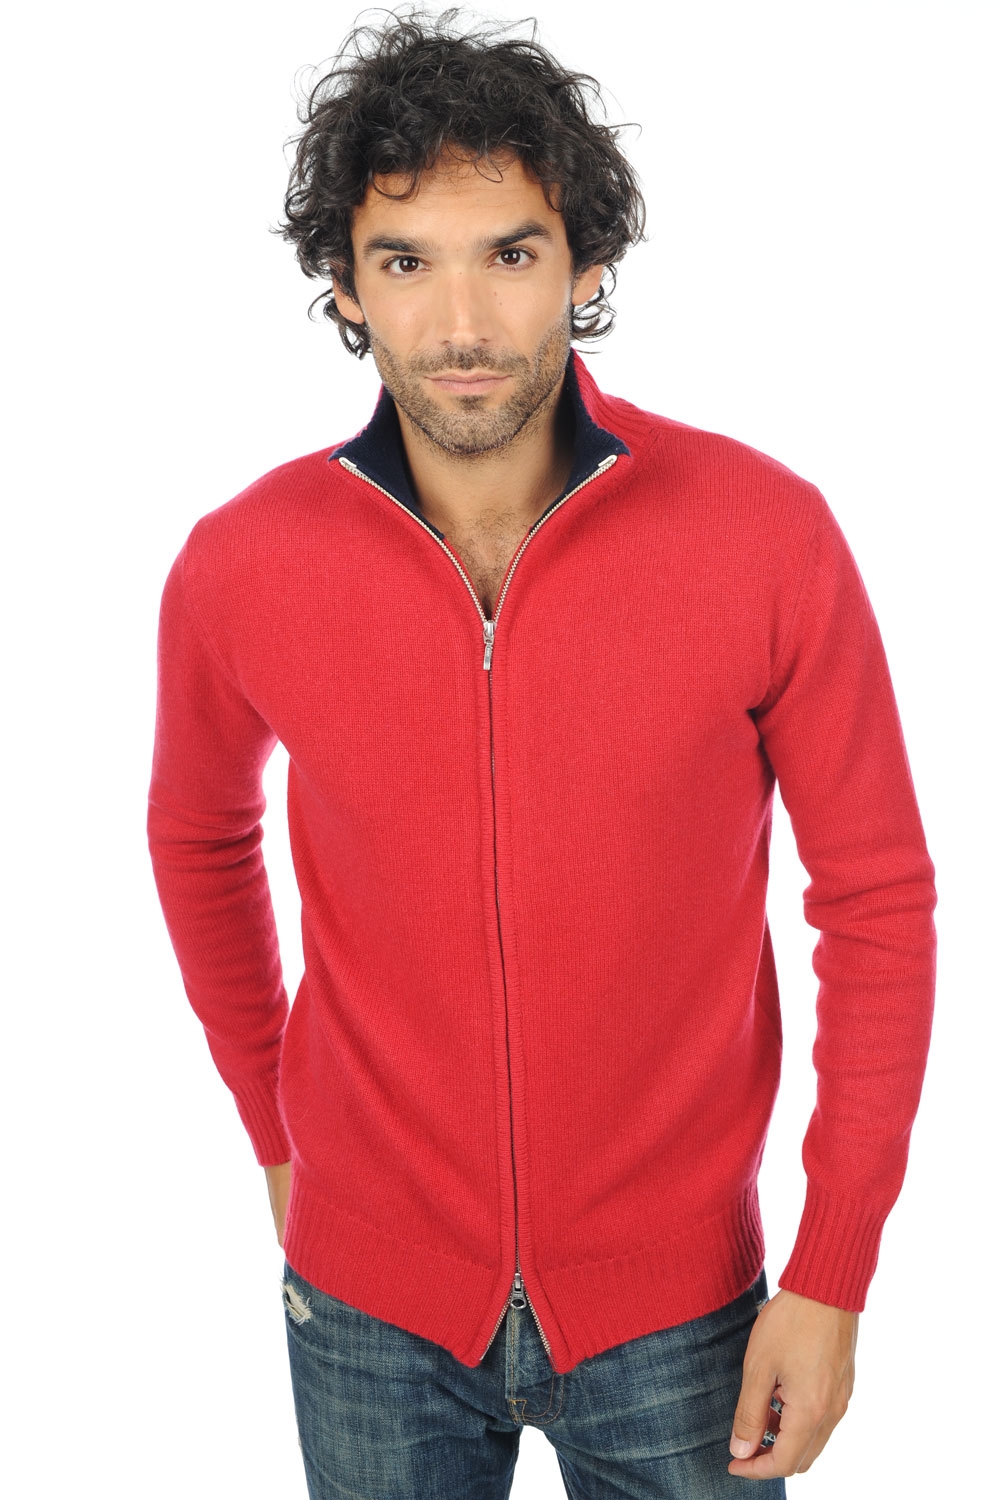 Cachemire pull homme zip capuche maxime rouge velours marine fonce m